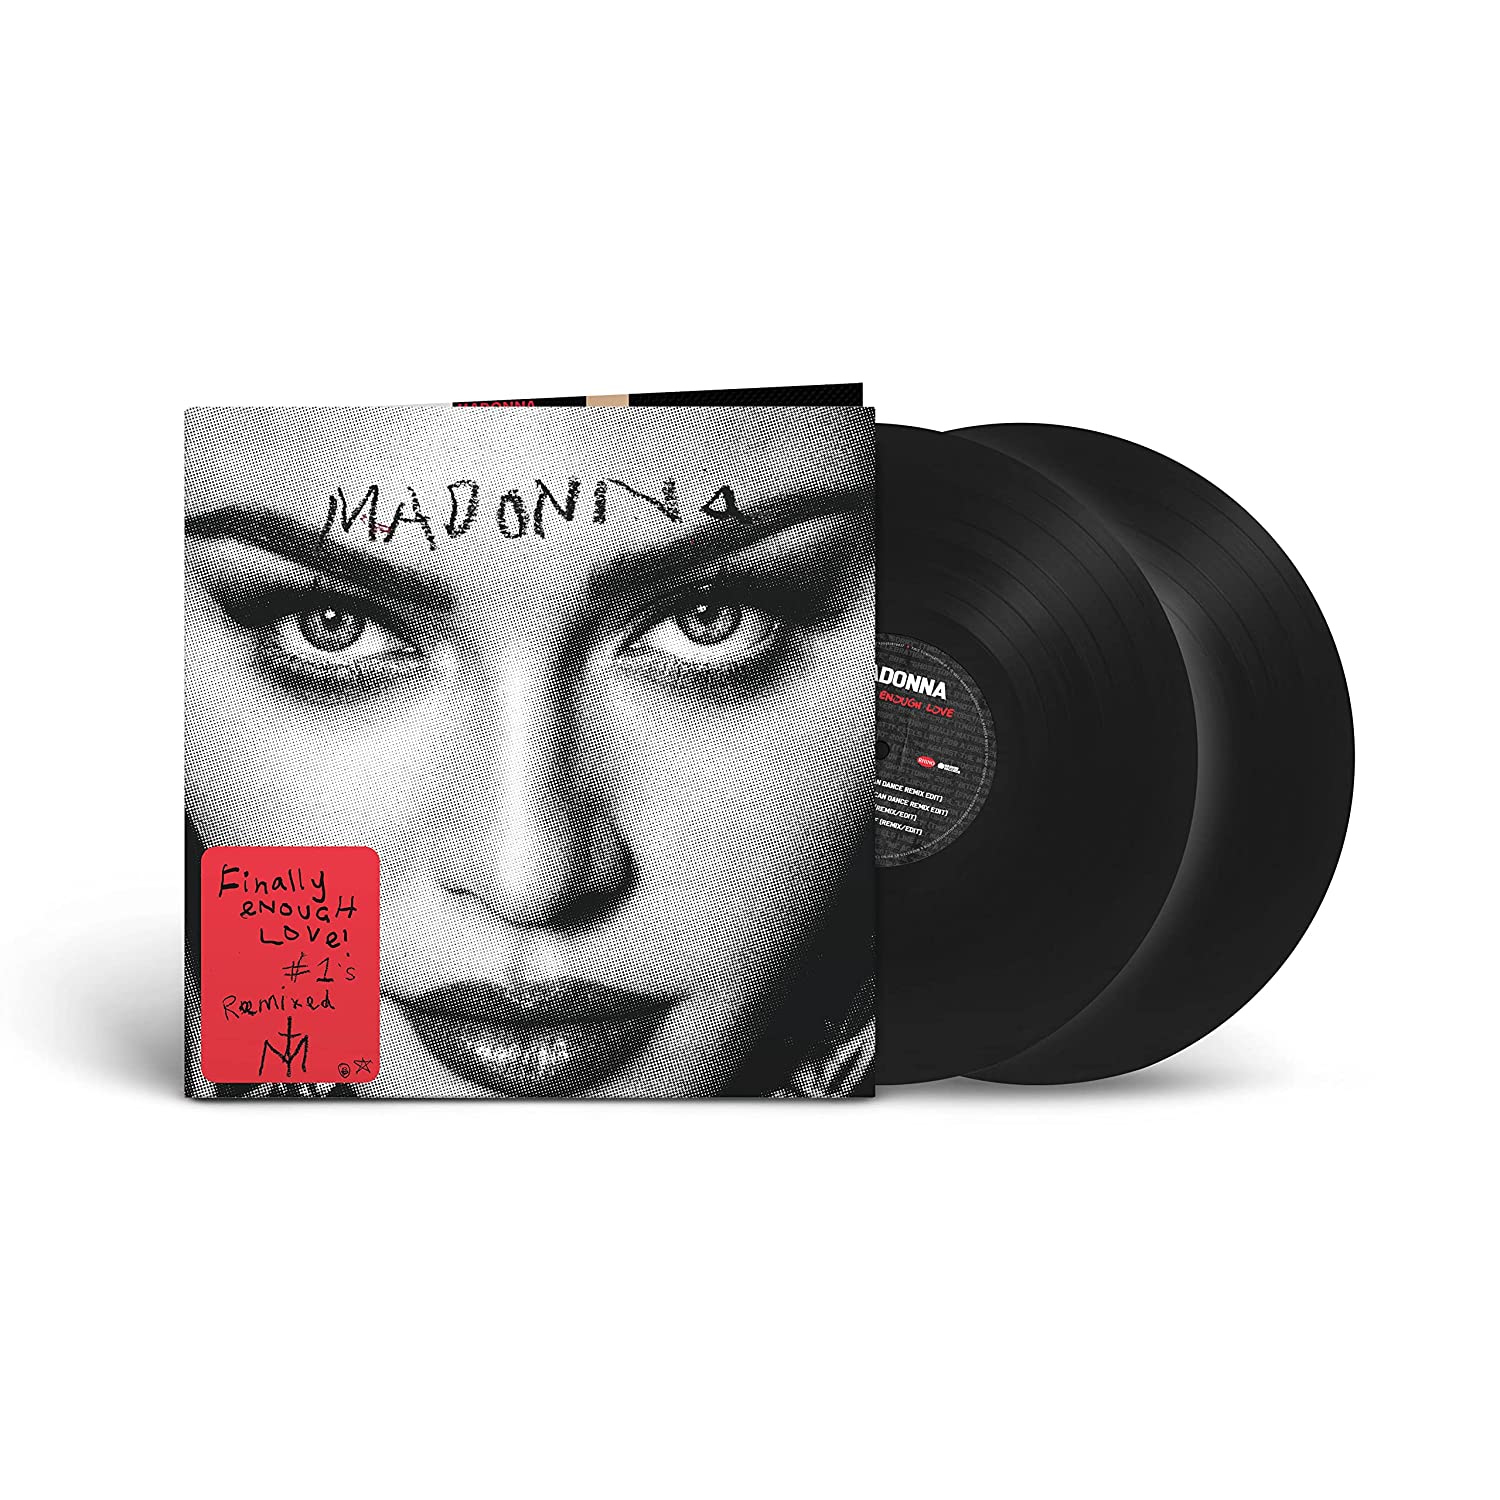 Pročitajte više o članku Madonna uskoro objavljuje impresivan kompilacijski album “Finally Enough Love: 50 Number Ones”